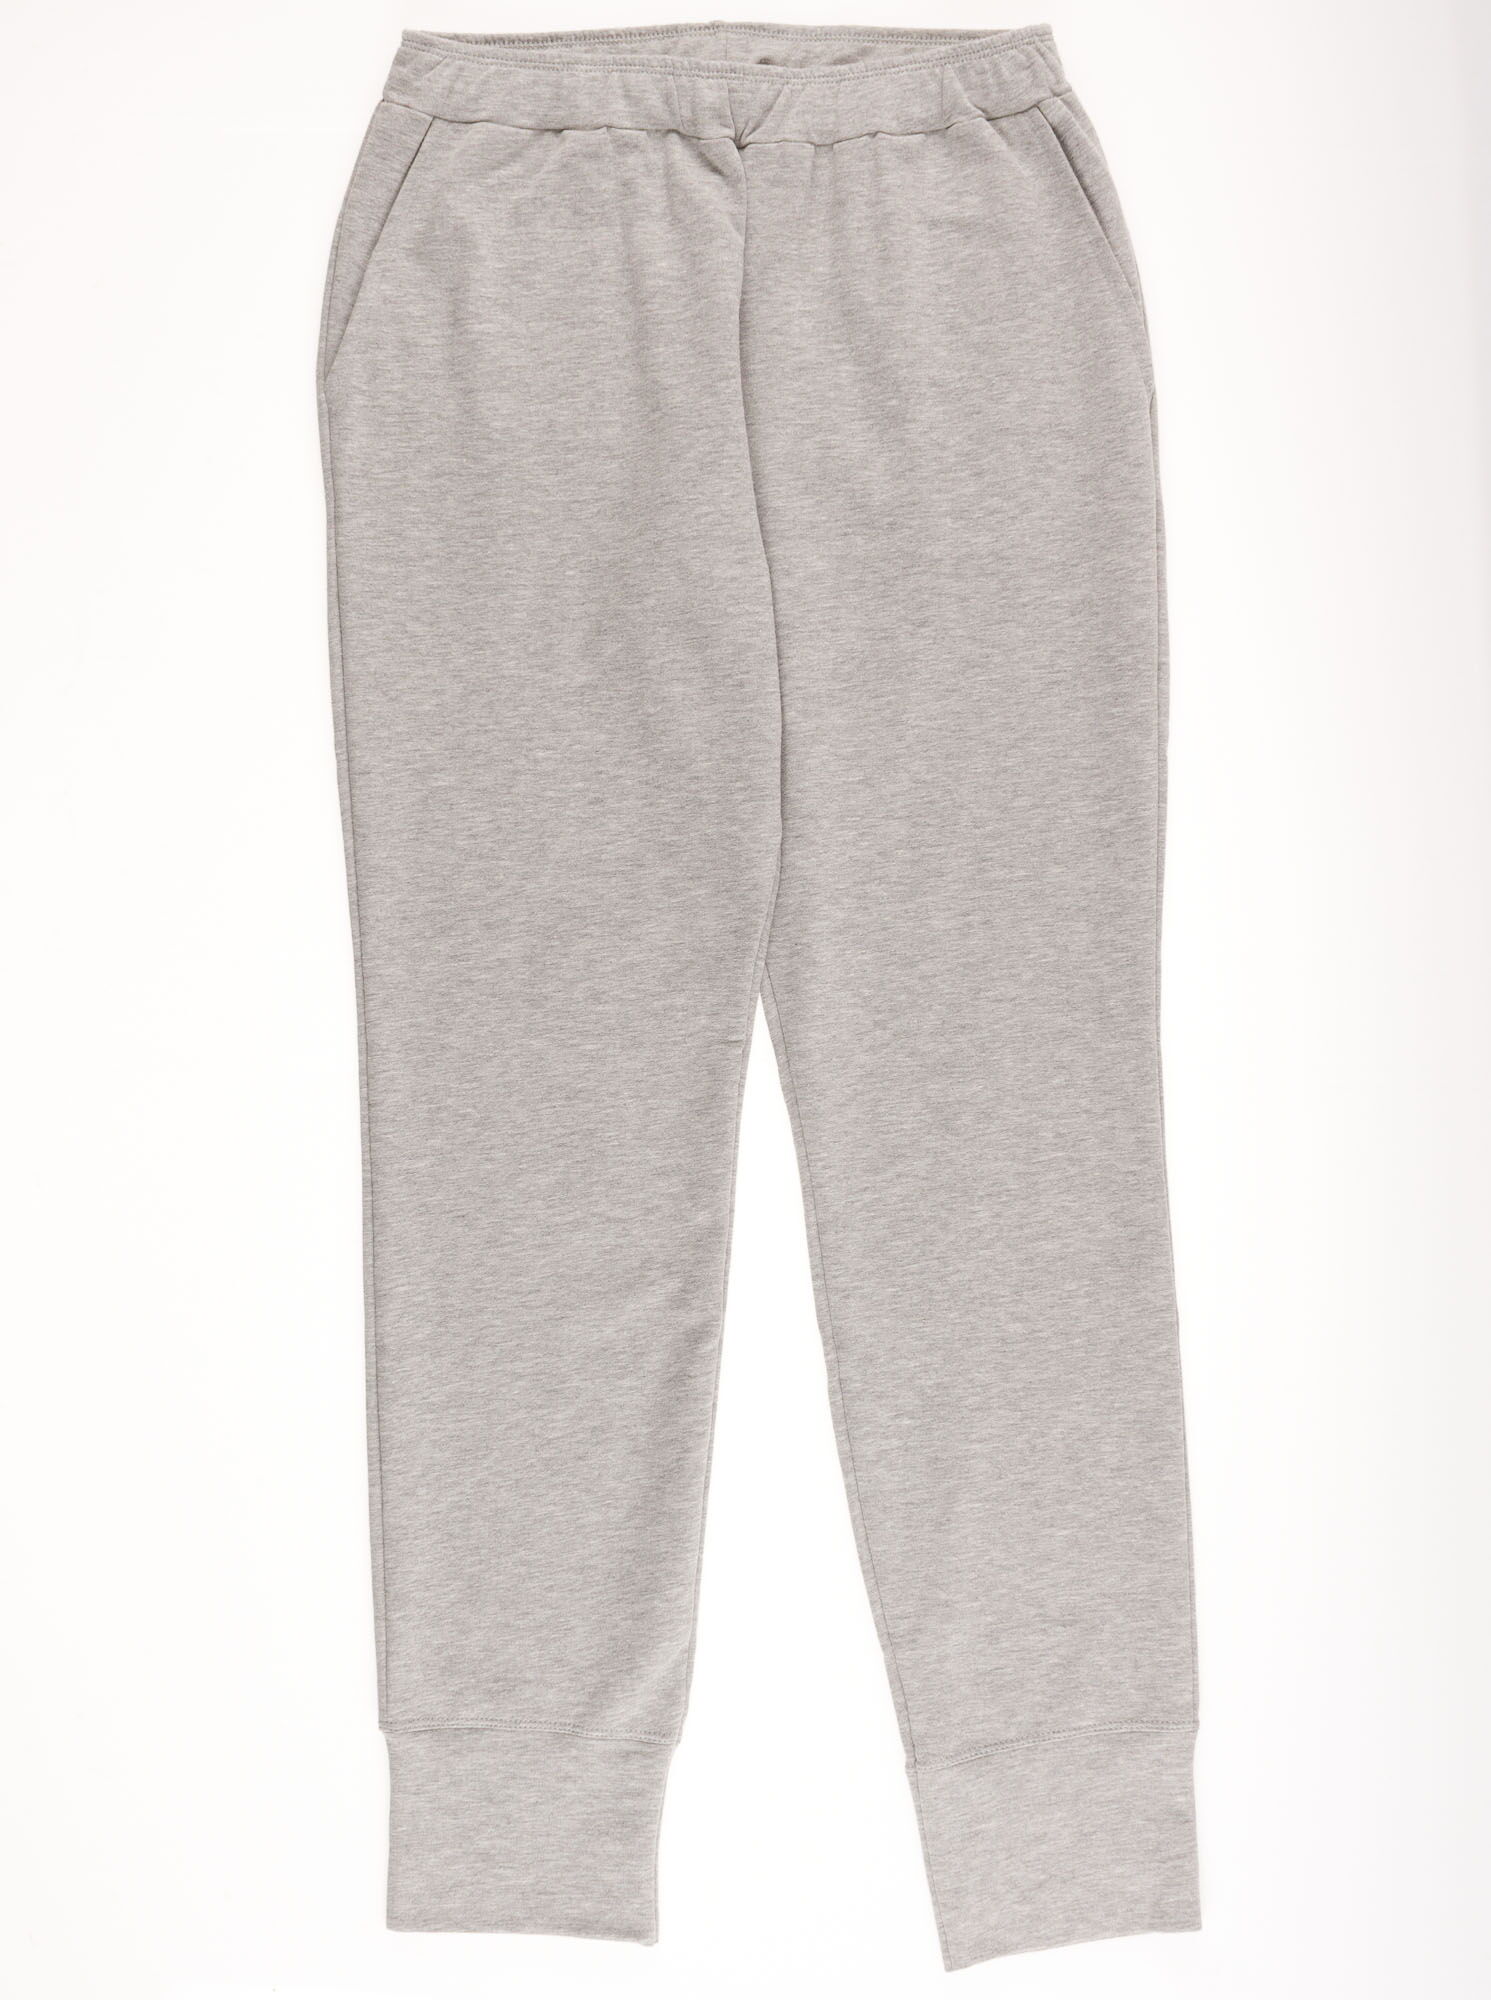 Комплект женский (кофта+штаны) EGO серый PJM 022 - картинка